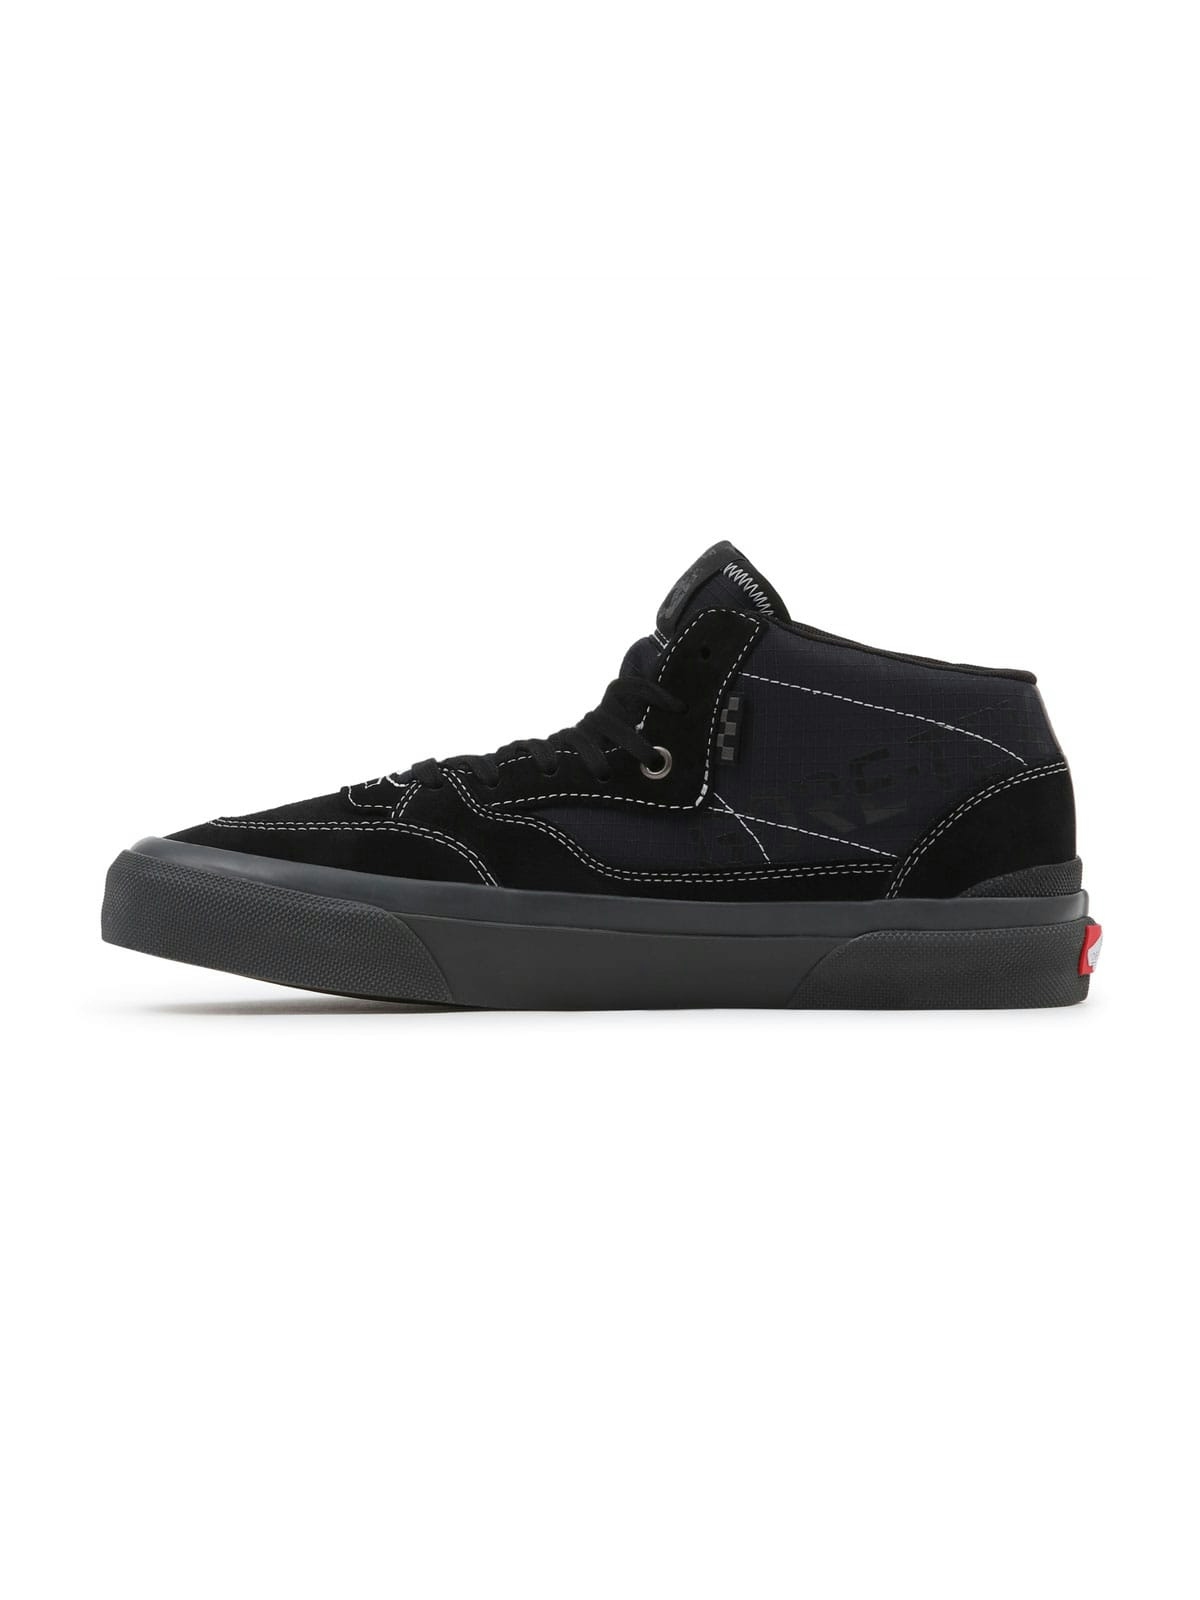 Vans Skate Half Cab '92 GORE-TEX Shoes Black 3